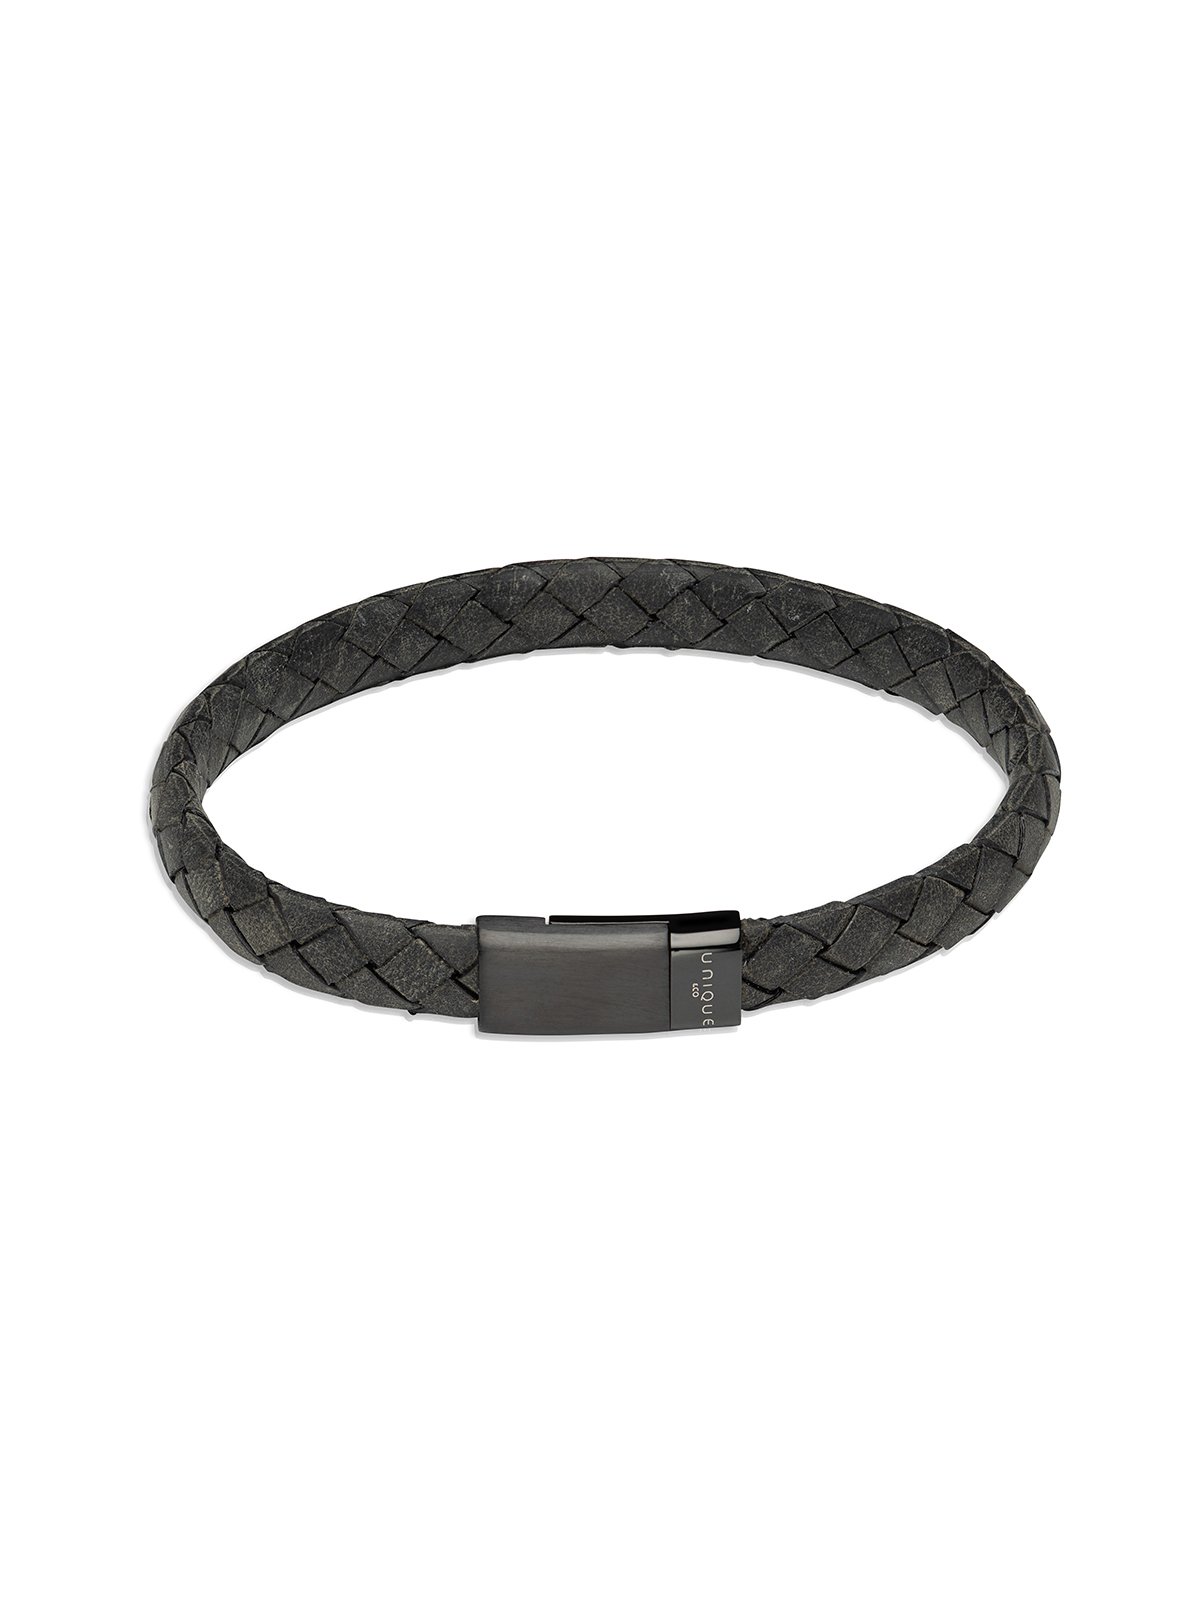 Unique & Co. Black Leather Bracelet with Black Plated Steel Clasp